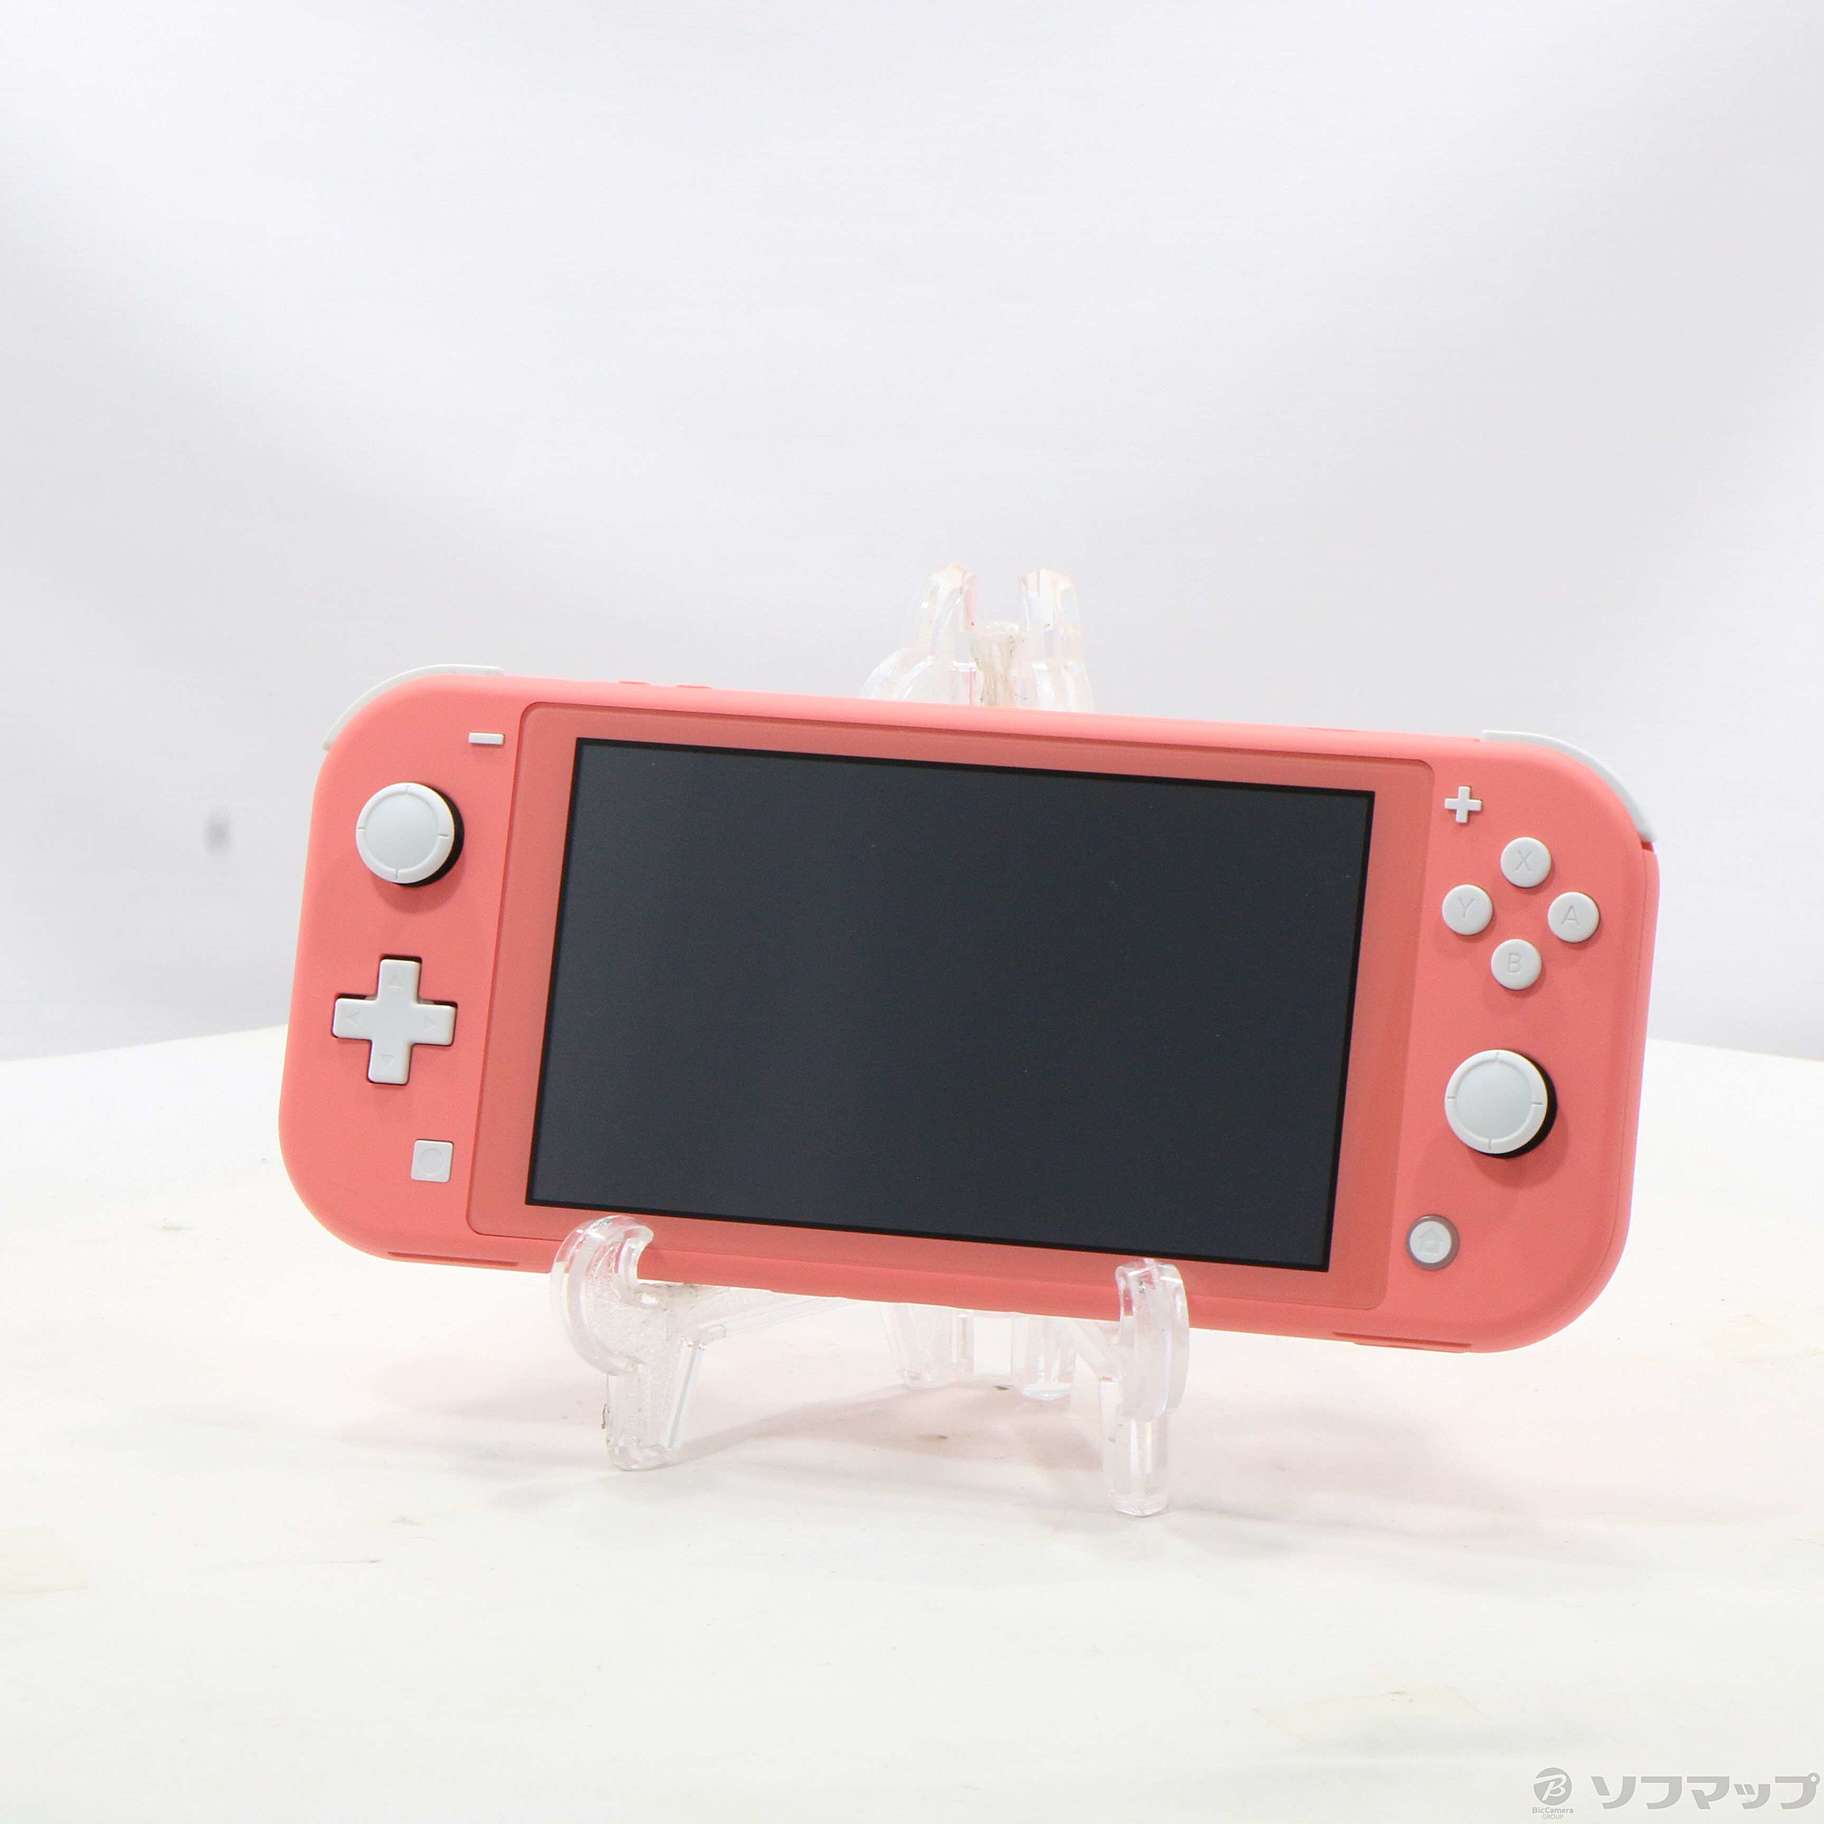 Nintendo Switch Lite コーラル 新品